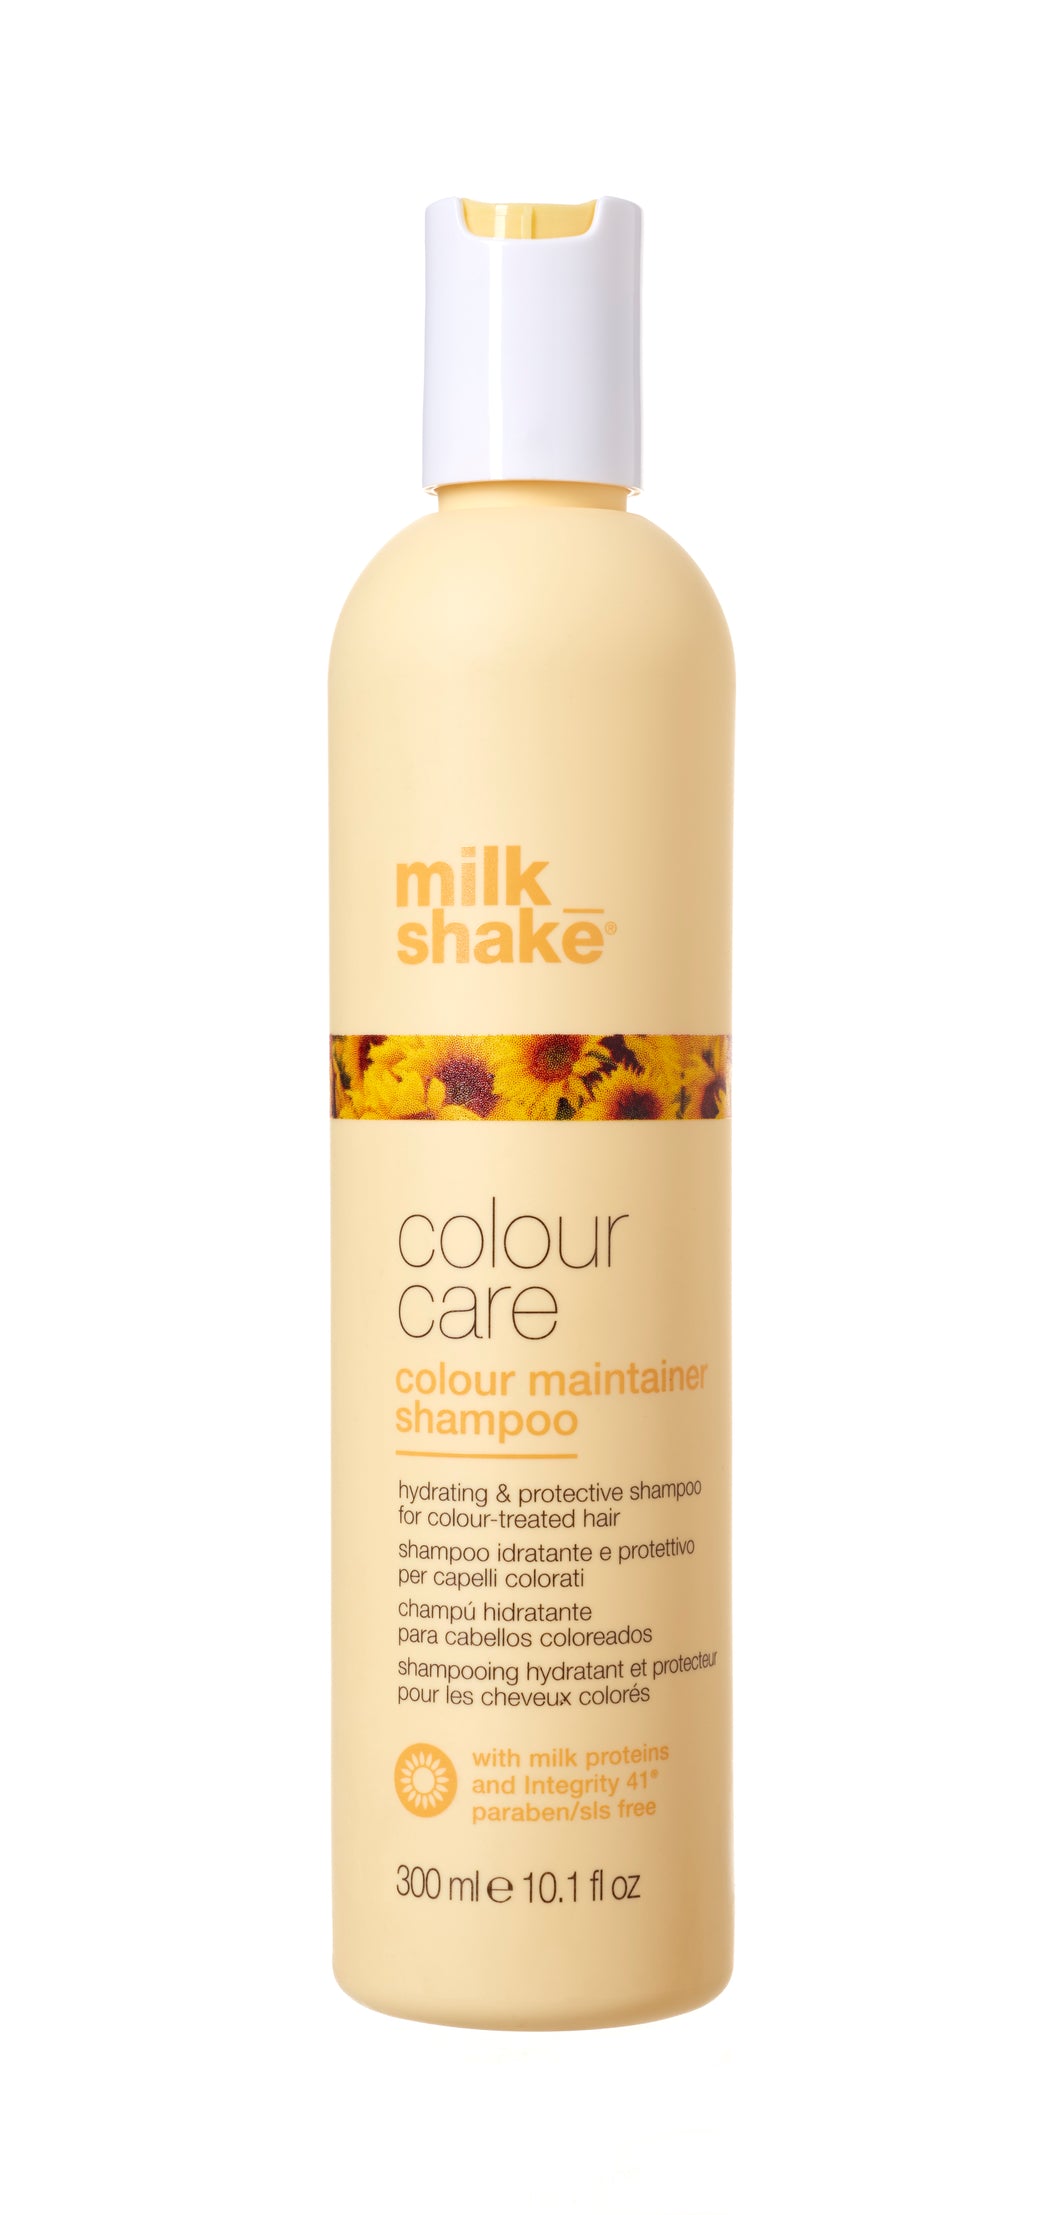 milk_shake colour maintainer shampoo 300ml